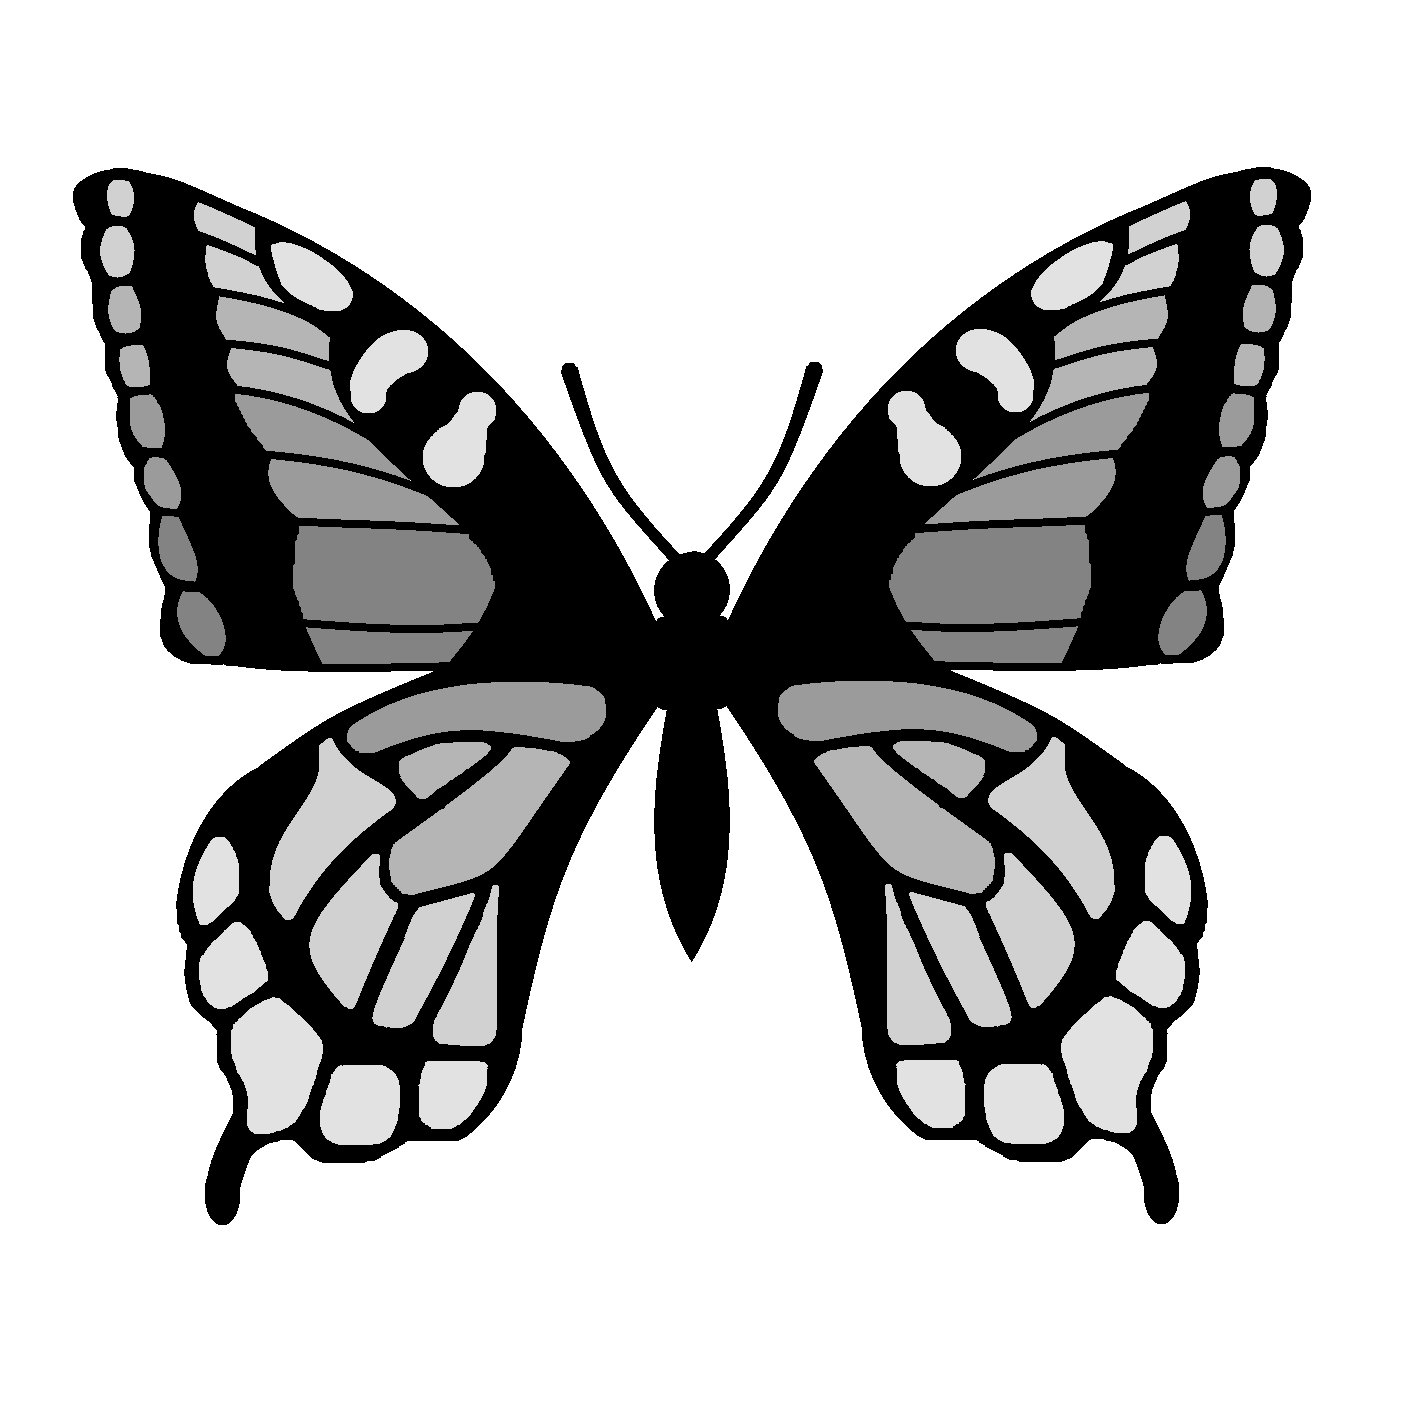 Распечатки бабочек черно. Трафареты бабочки. Бабочка рисунок. Бабочки для распечатки. Бабочка контур.